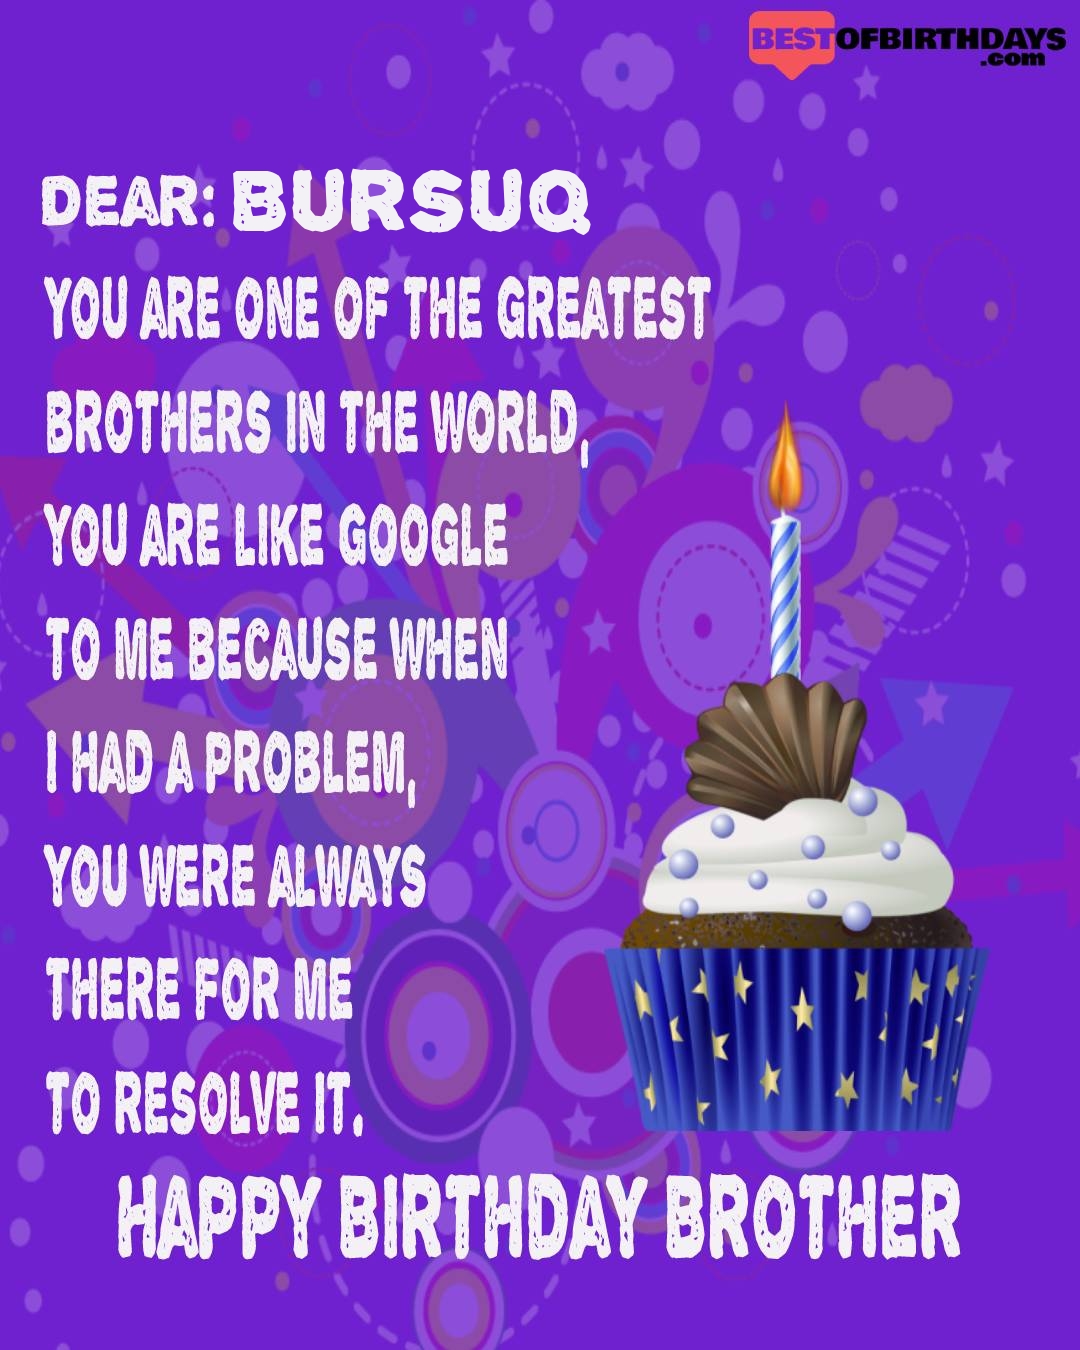 Happy birthday bursuq bhai brother bro